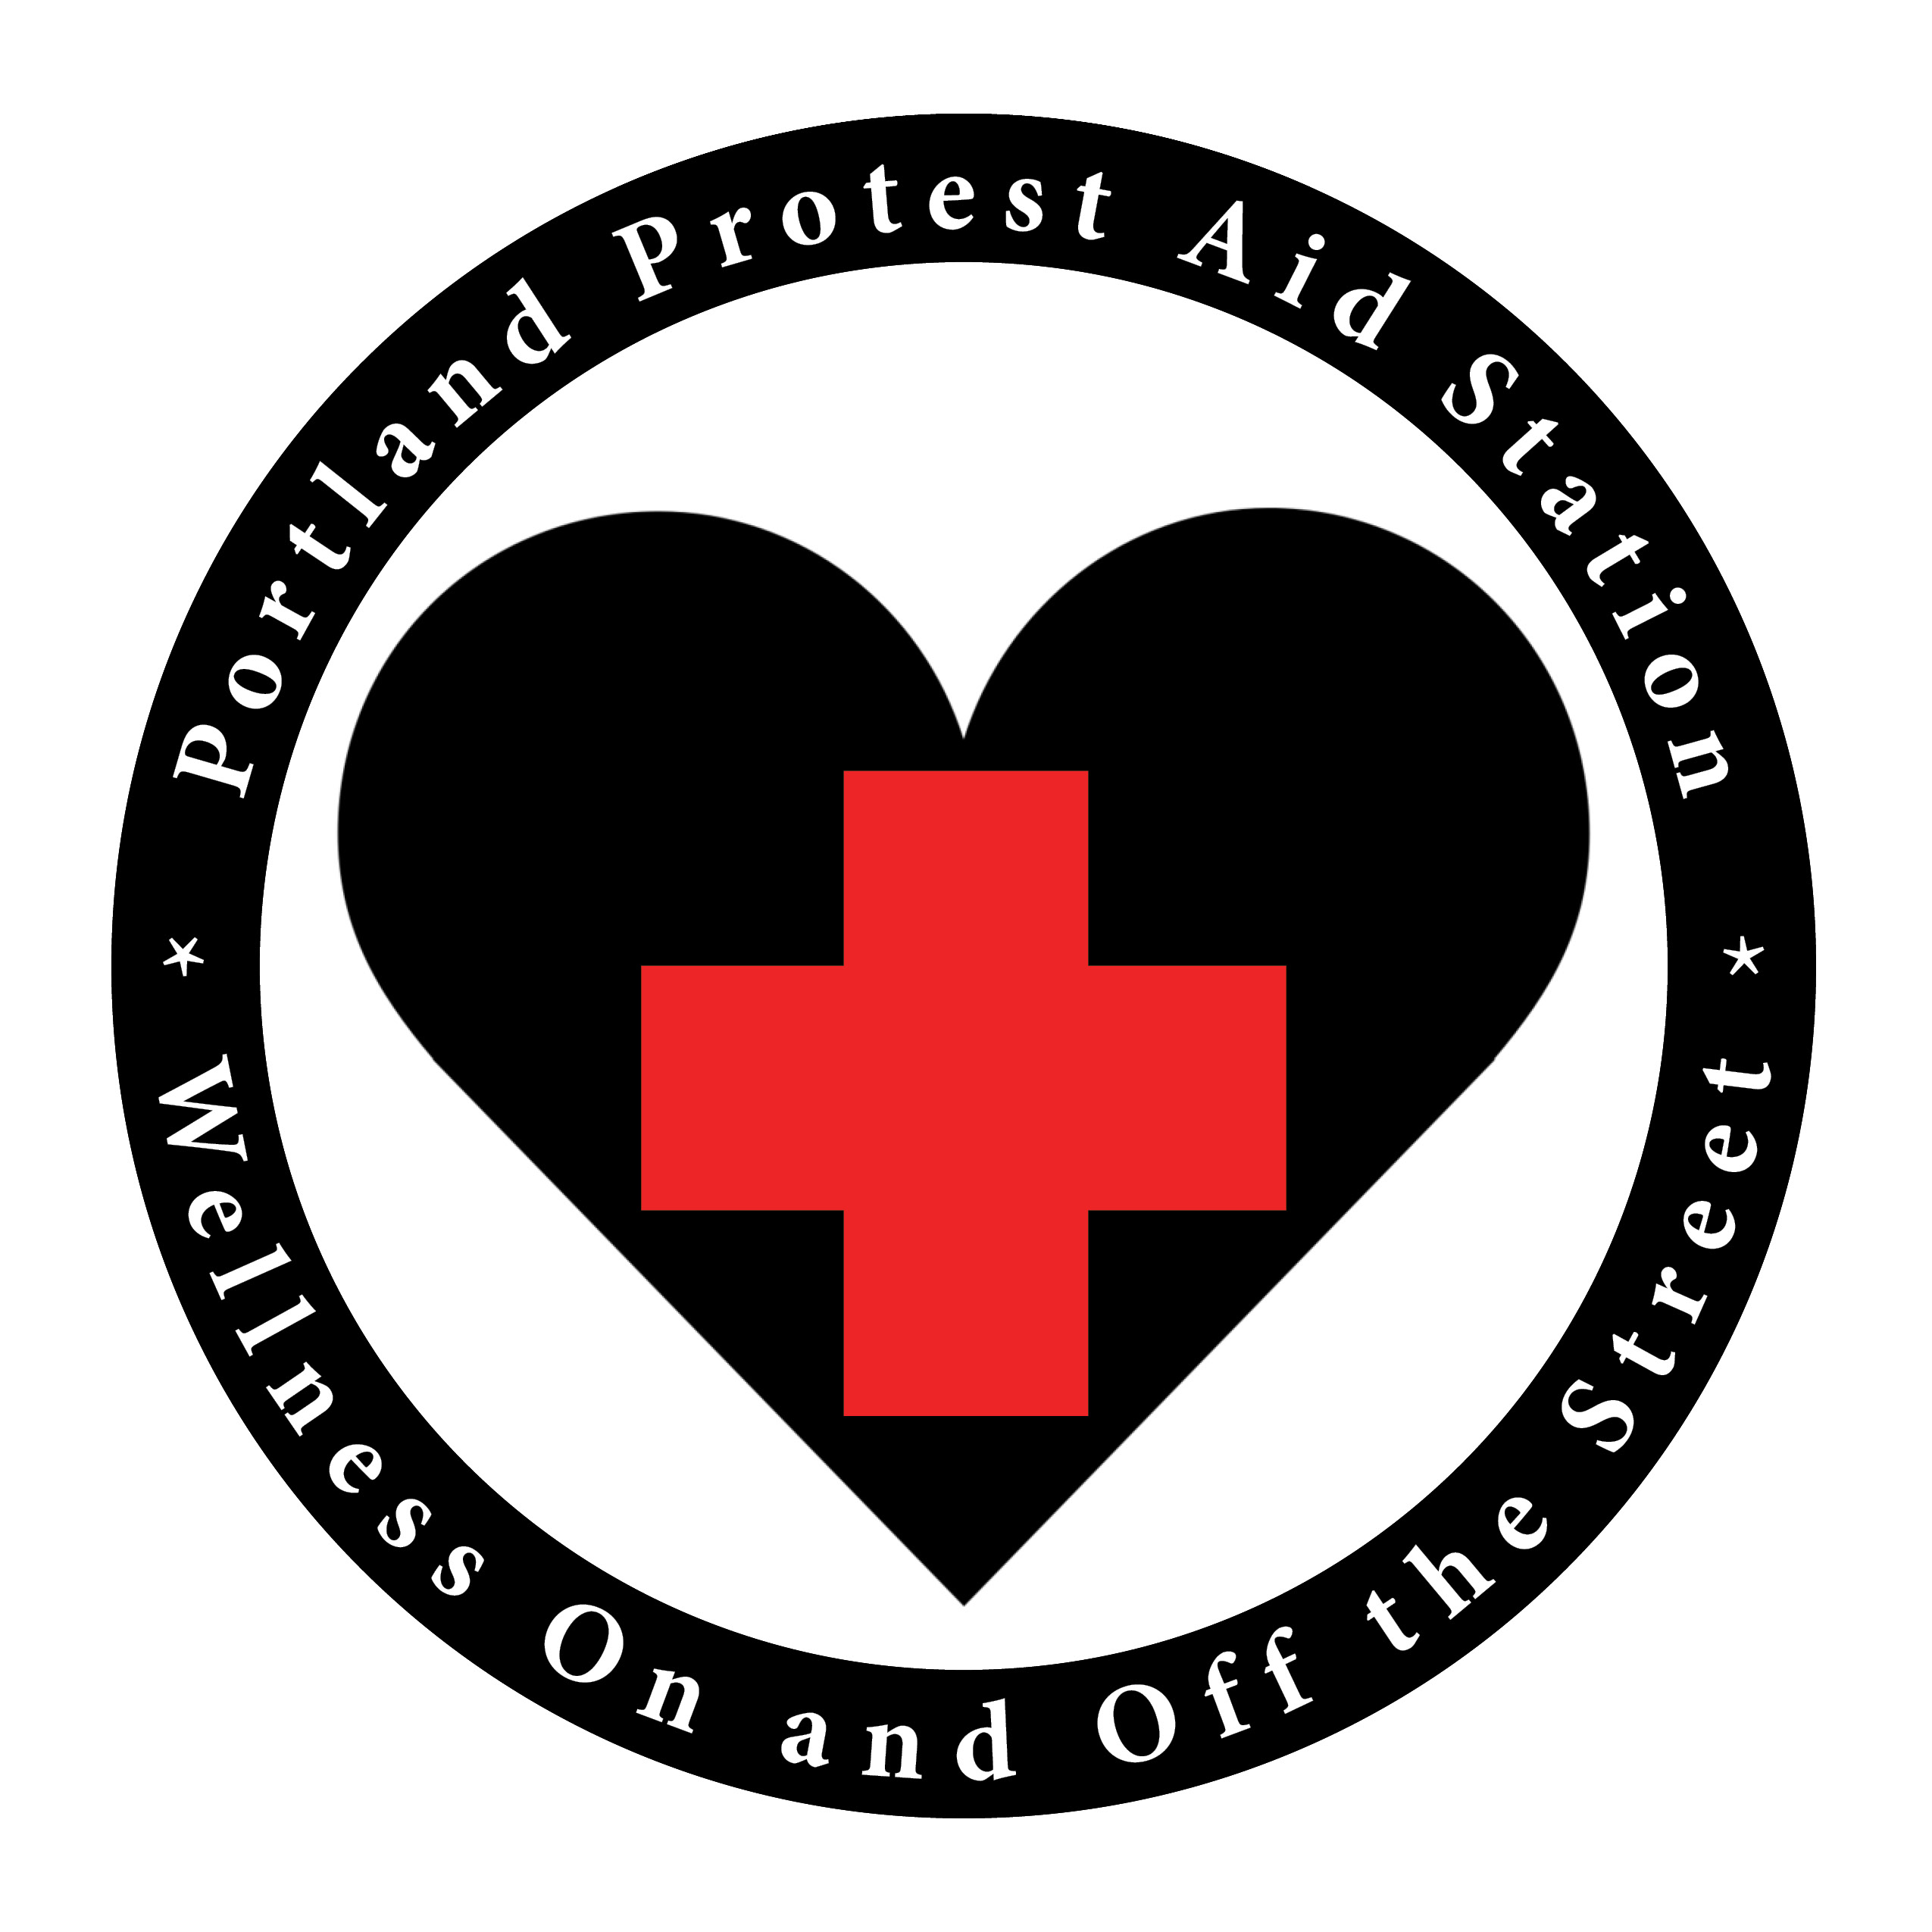 Portland Protest Aid Station logo summer 2020